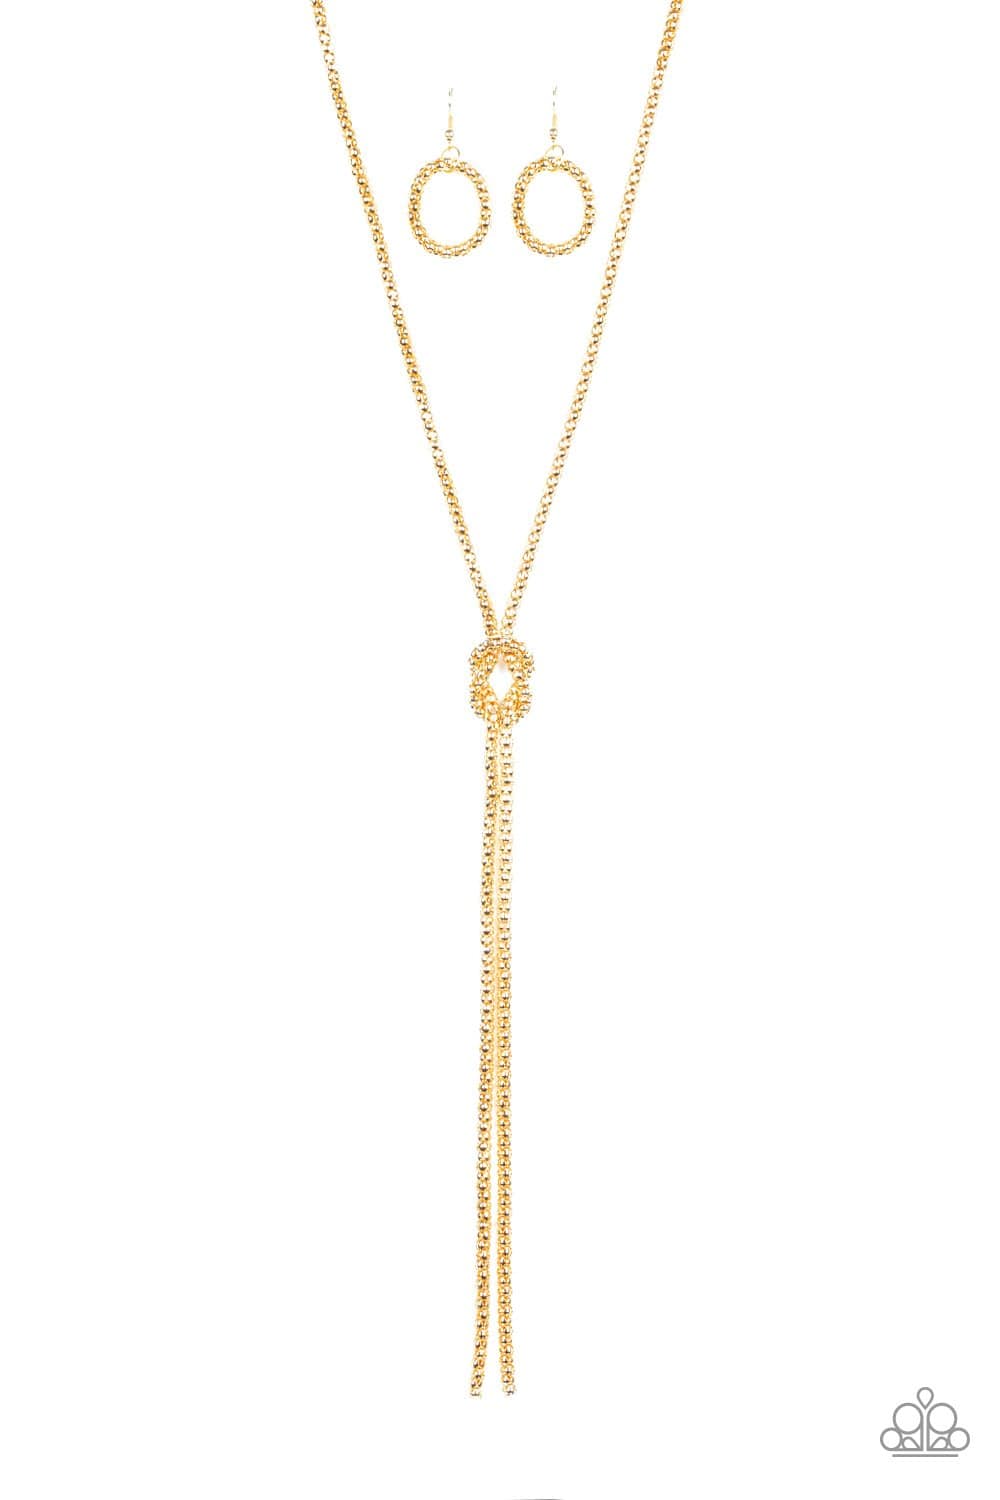 Born Ready - Gold Necklace - Paparazzi Accessories - GlaMarous Titi Jewels